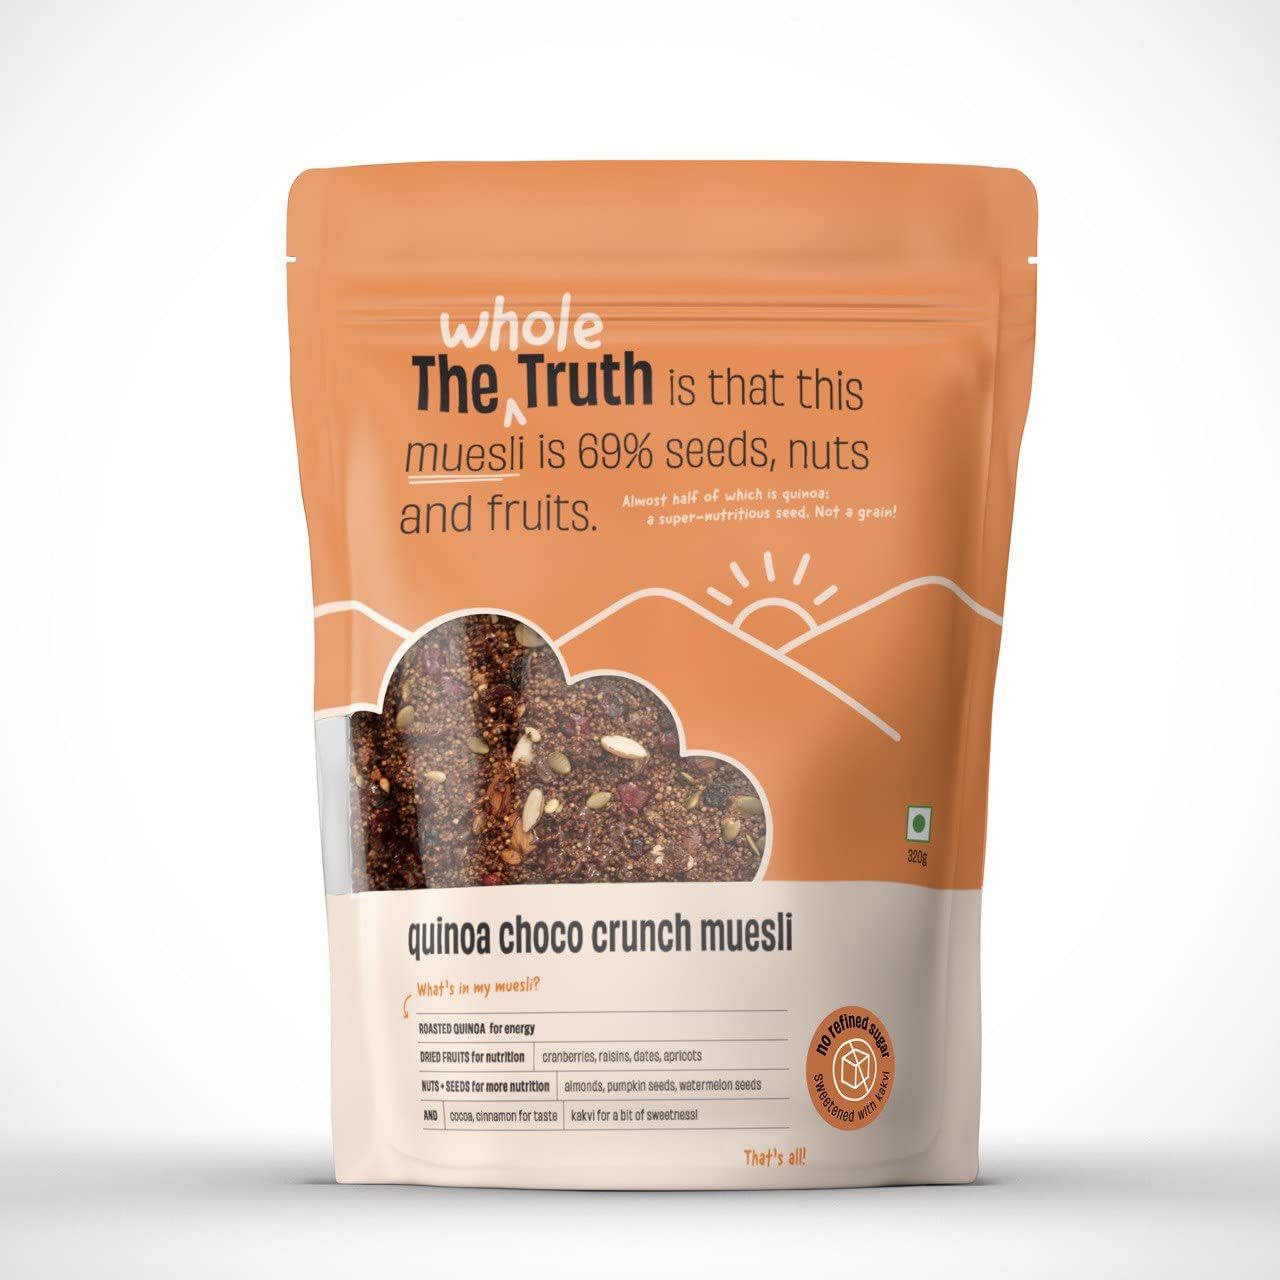 The Whole Truth Breakfast Muesli Quinoa Choco Crunch Image